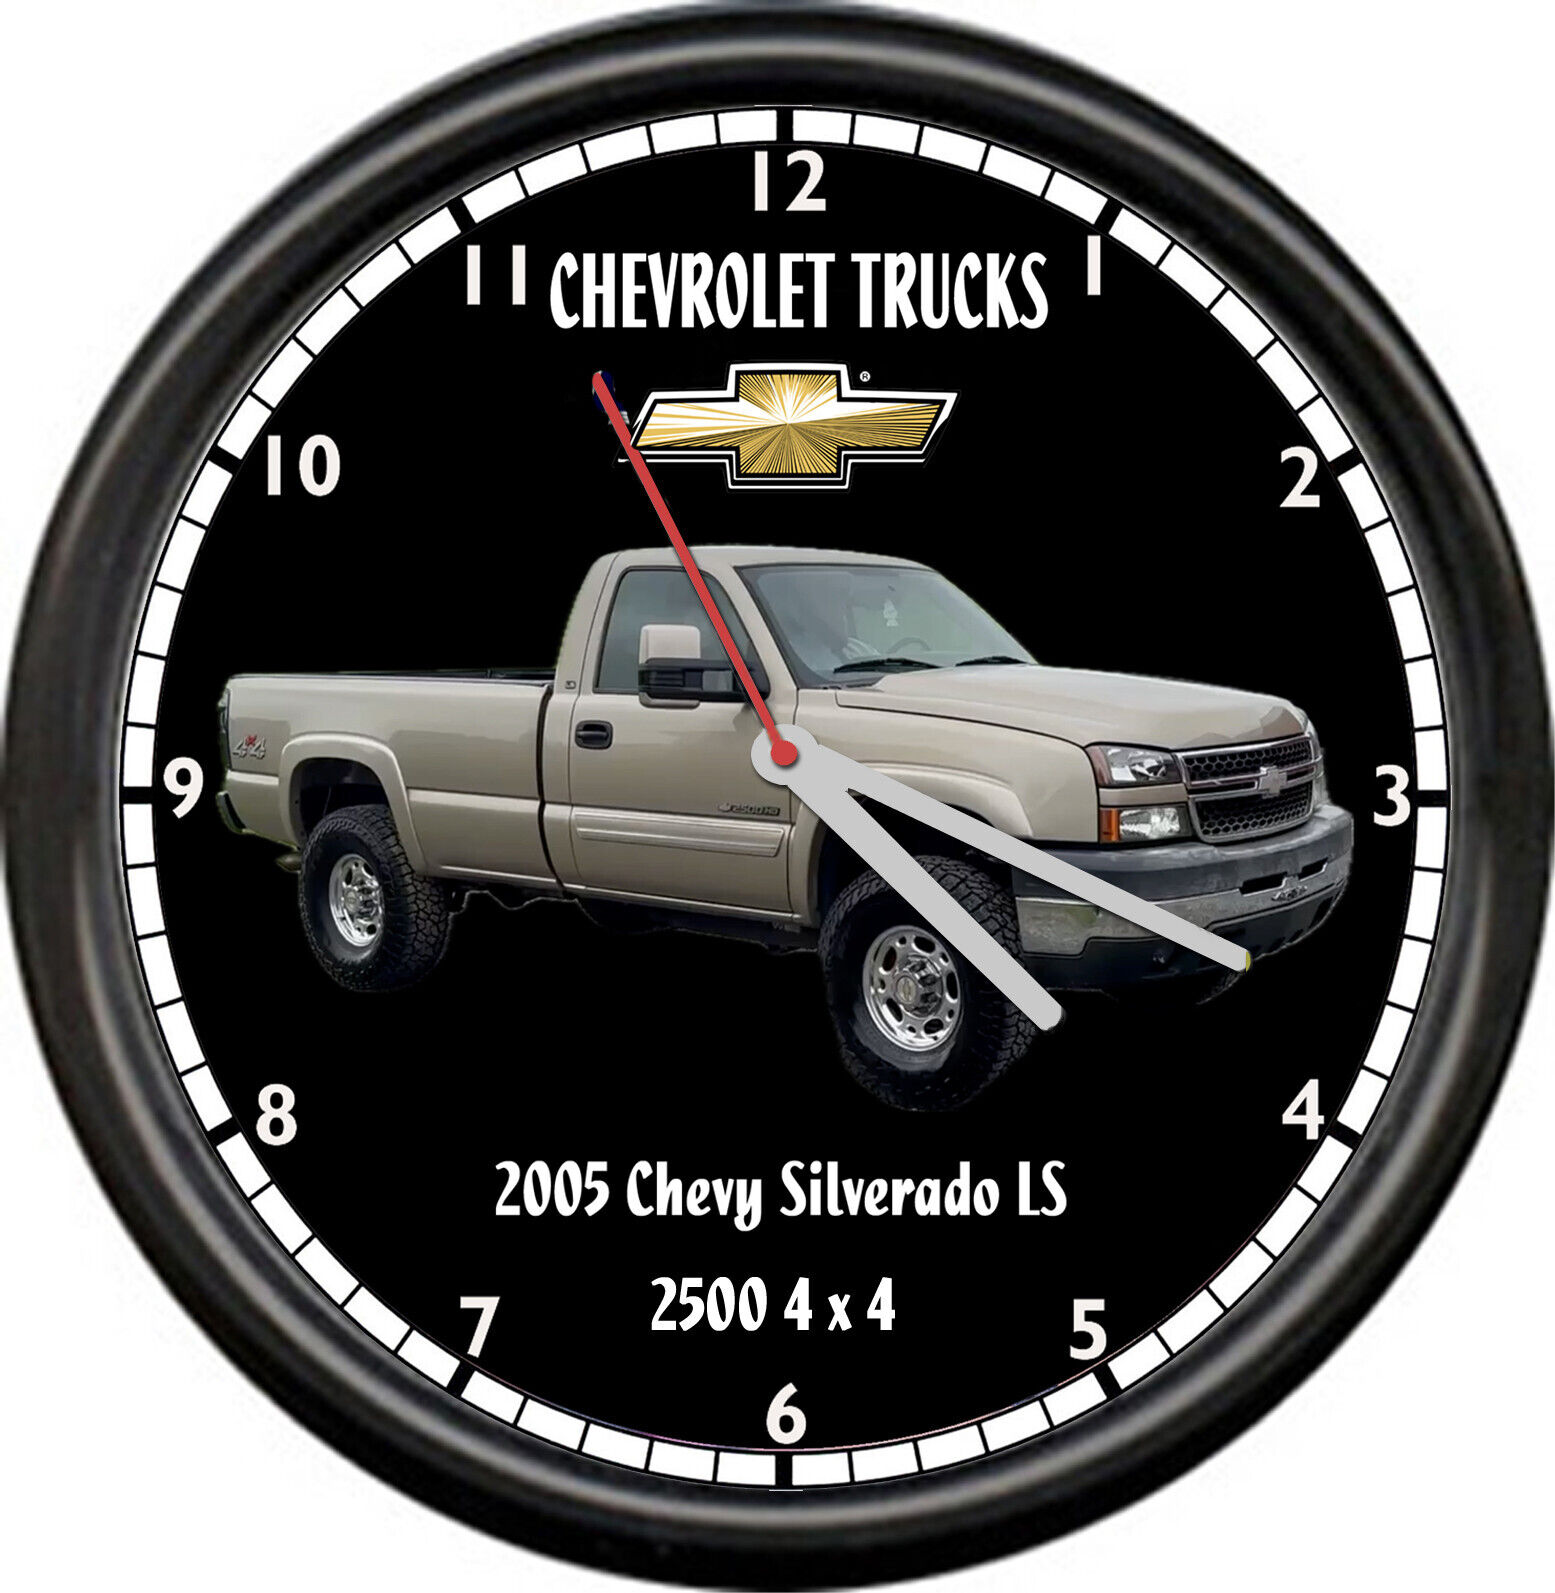 Licensed 2005 Chevrolet Silverado LS 2500 4x4 Truck General Motors Wall Clock